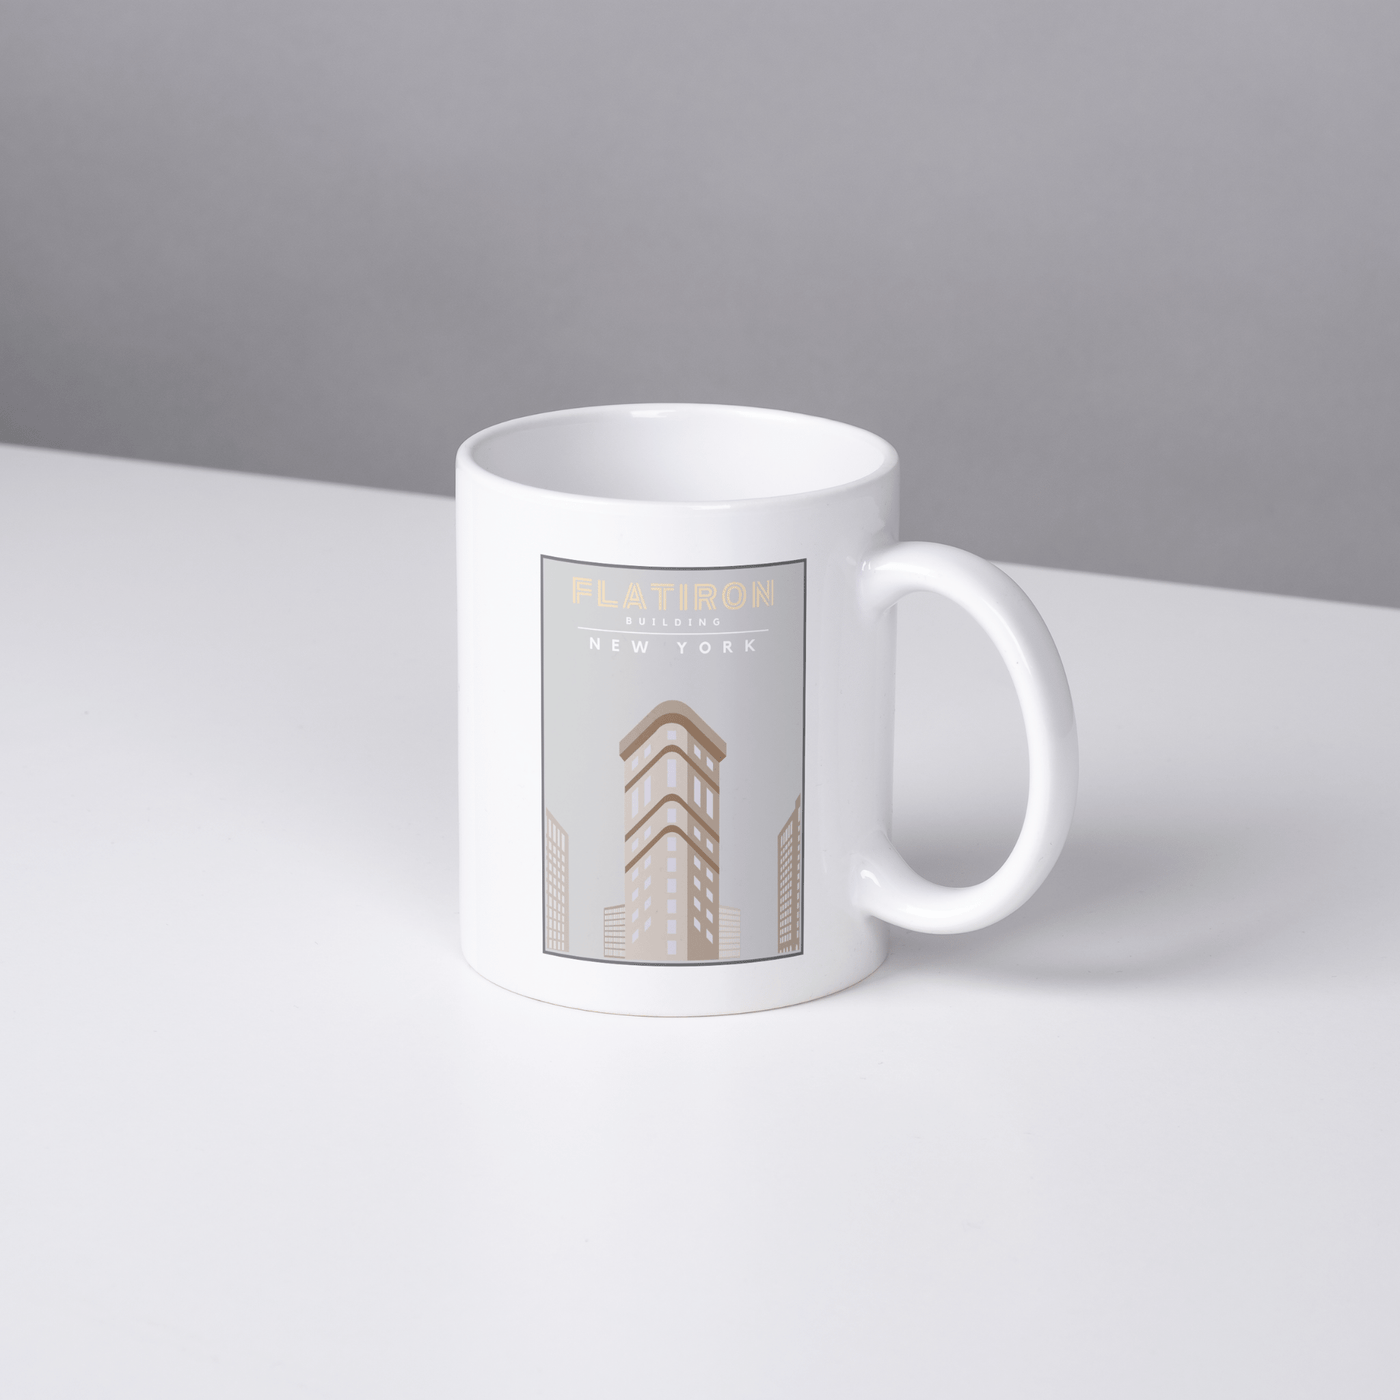 new york mug featuring the Flatiron Building